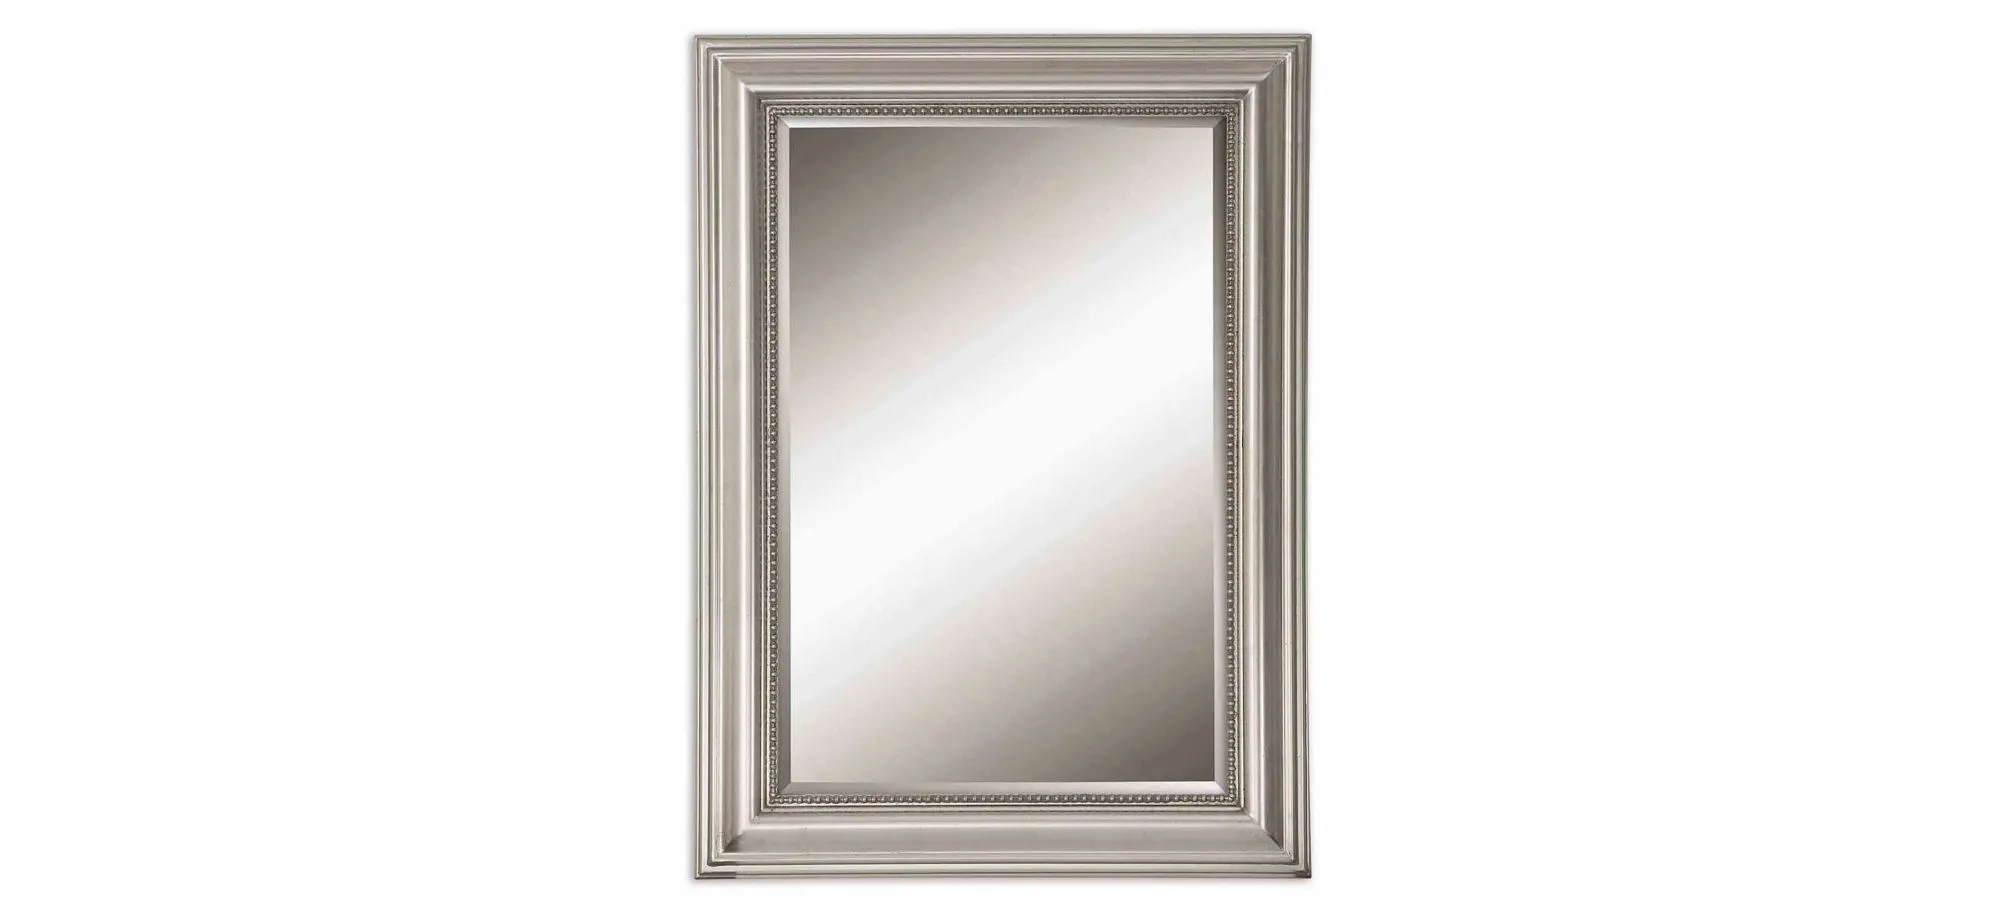 Stuart Silver Beaded Wall Mirror in Silver Leaf by Uttermost